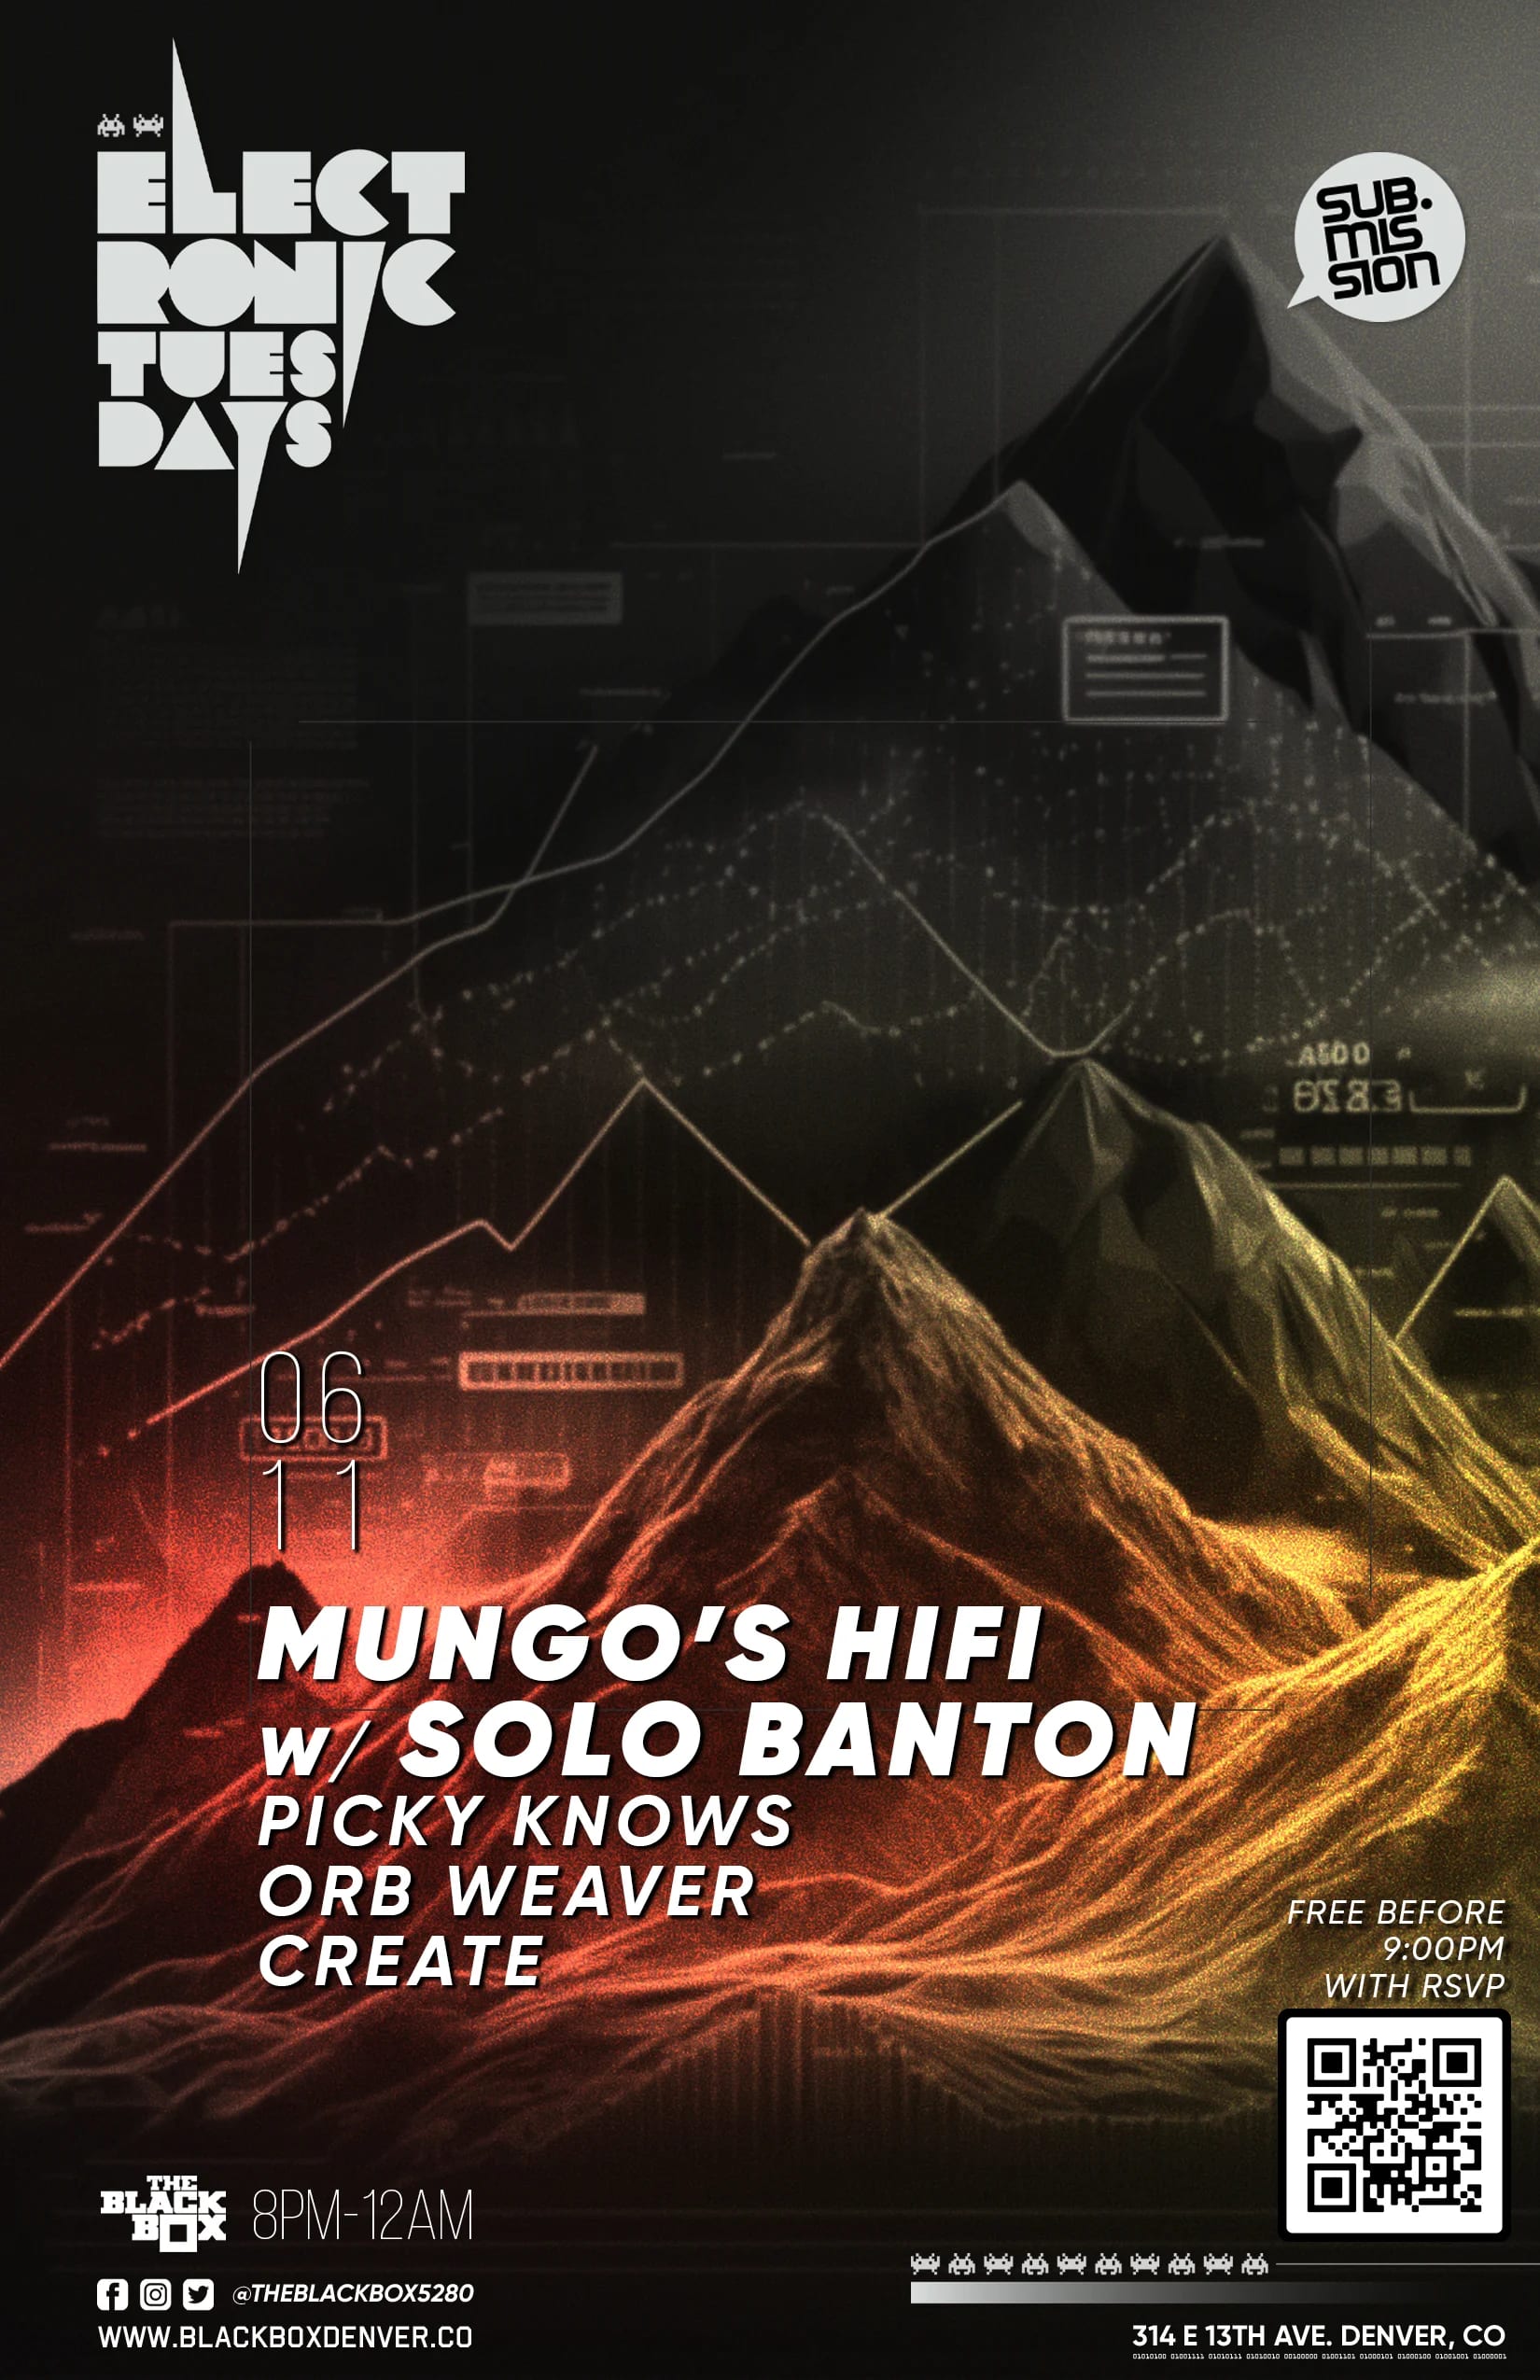 Sub.mission Electronic Tuesdays: Mungo's HiFi + Solo Banton w/ Picky Knows, Orbweaver, Create